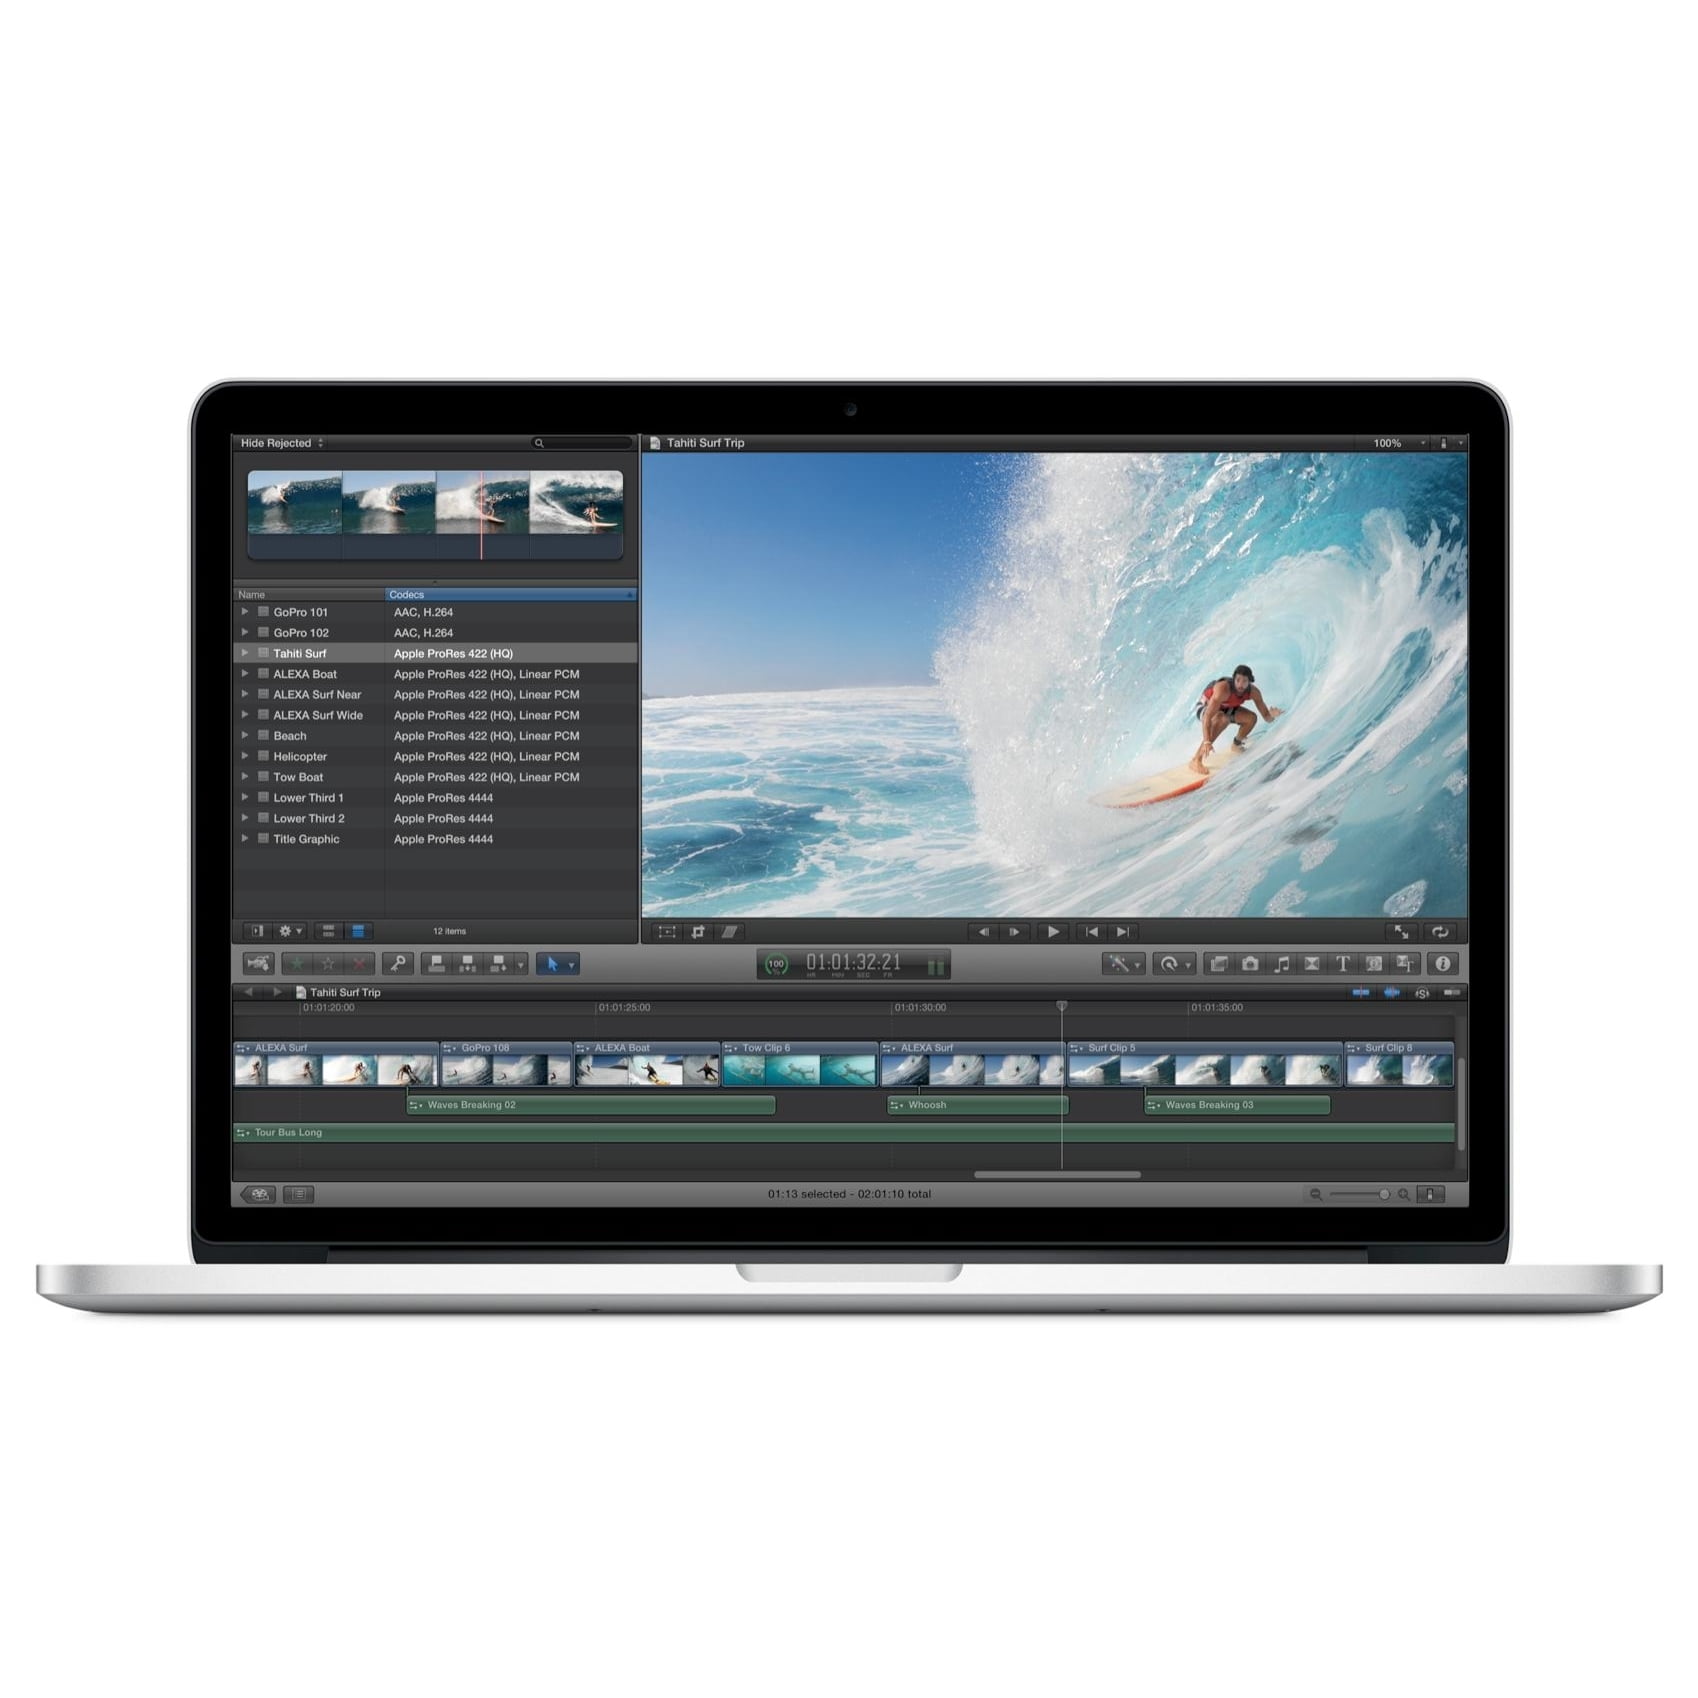 Apple MacBook Pro MC975LL/A Intel Core i7-3615QM X4 2.3GHz 8GB 256GB  SSD,Silver (Scratch And Dent Refurbished)